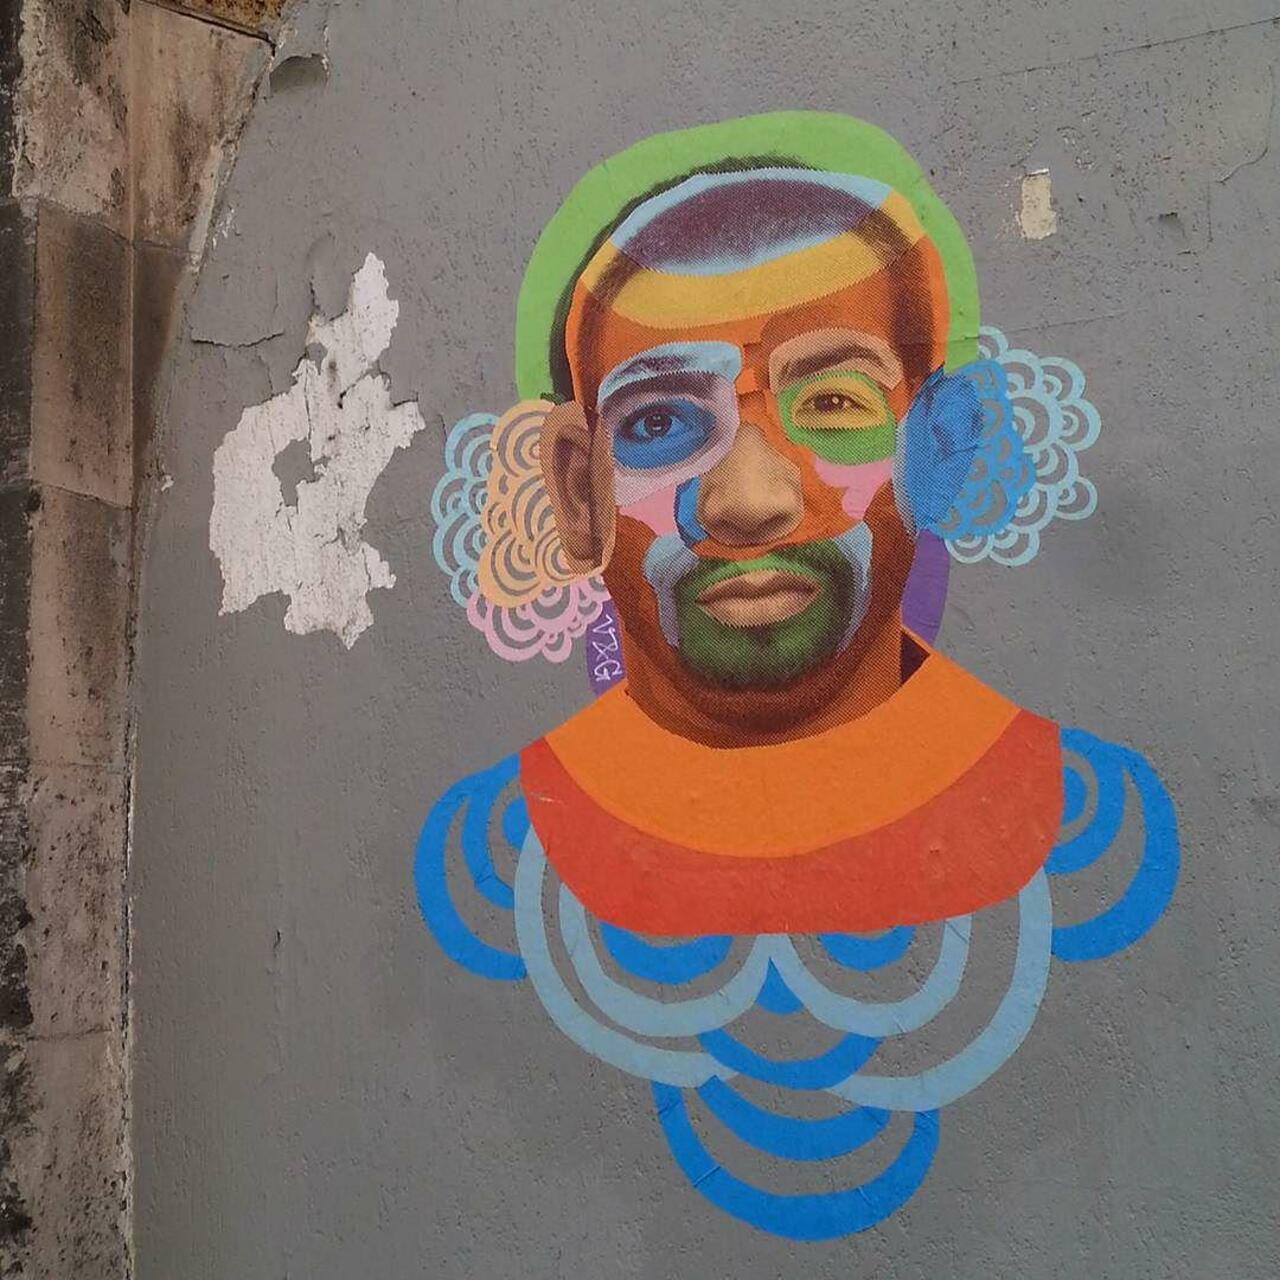 #Paris #graffiti photo by @fotoflaneuse http://ift.tt/1K4VP9o #StreetArt http://t.co/vGNaHJTGX3